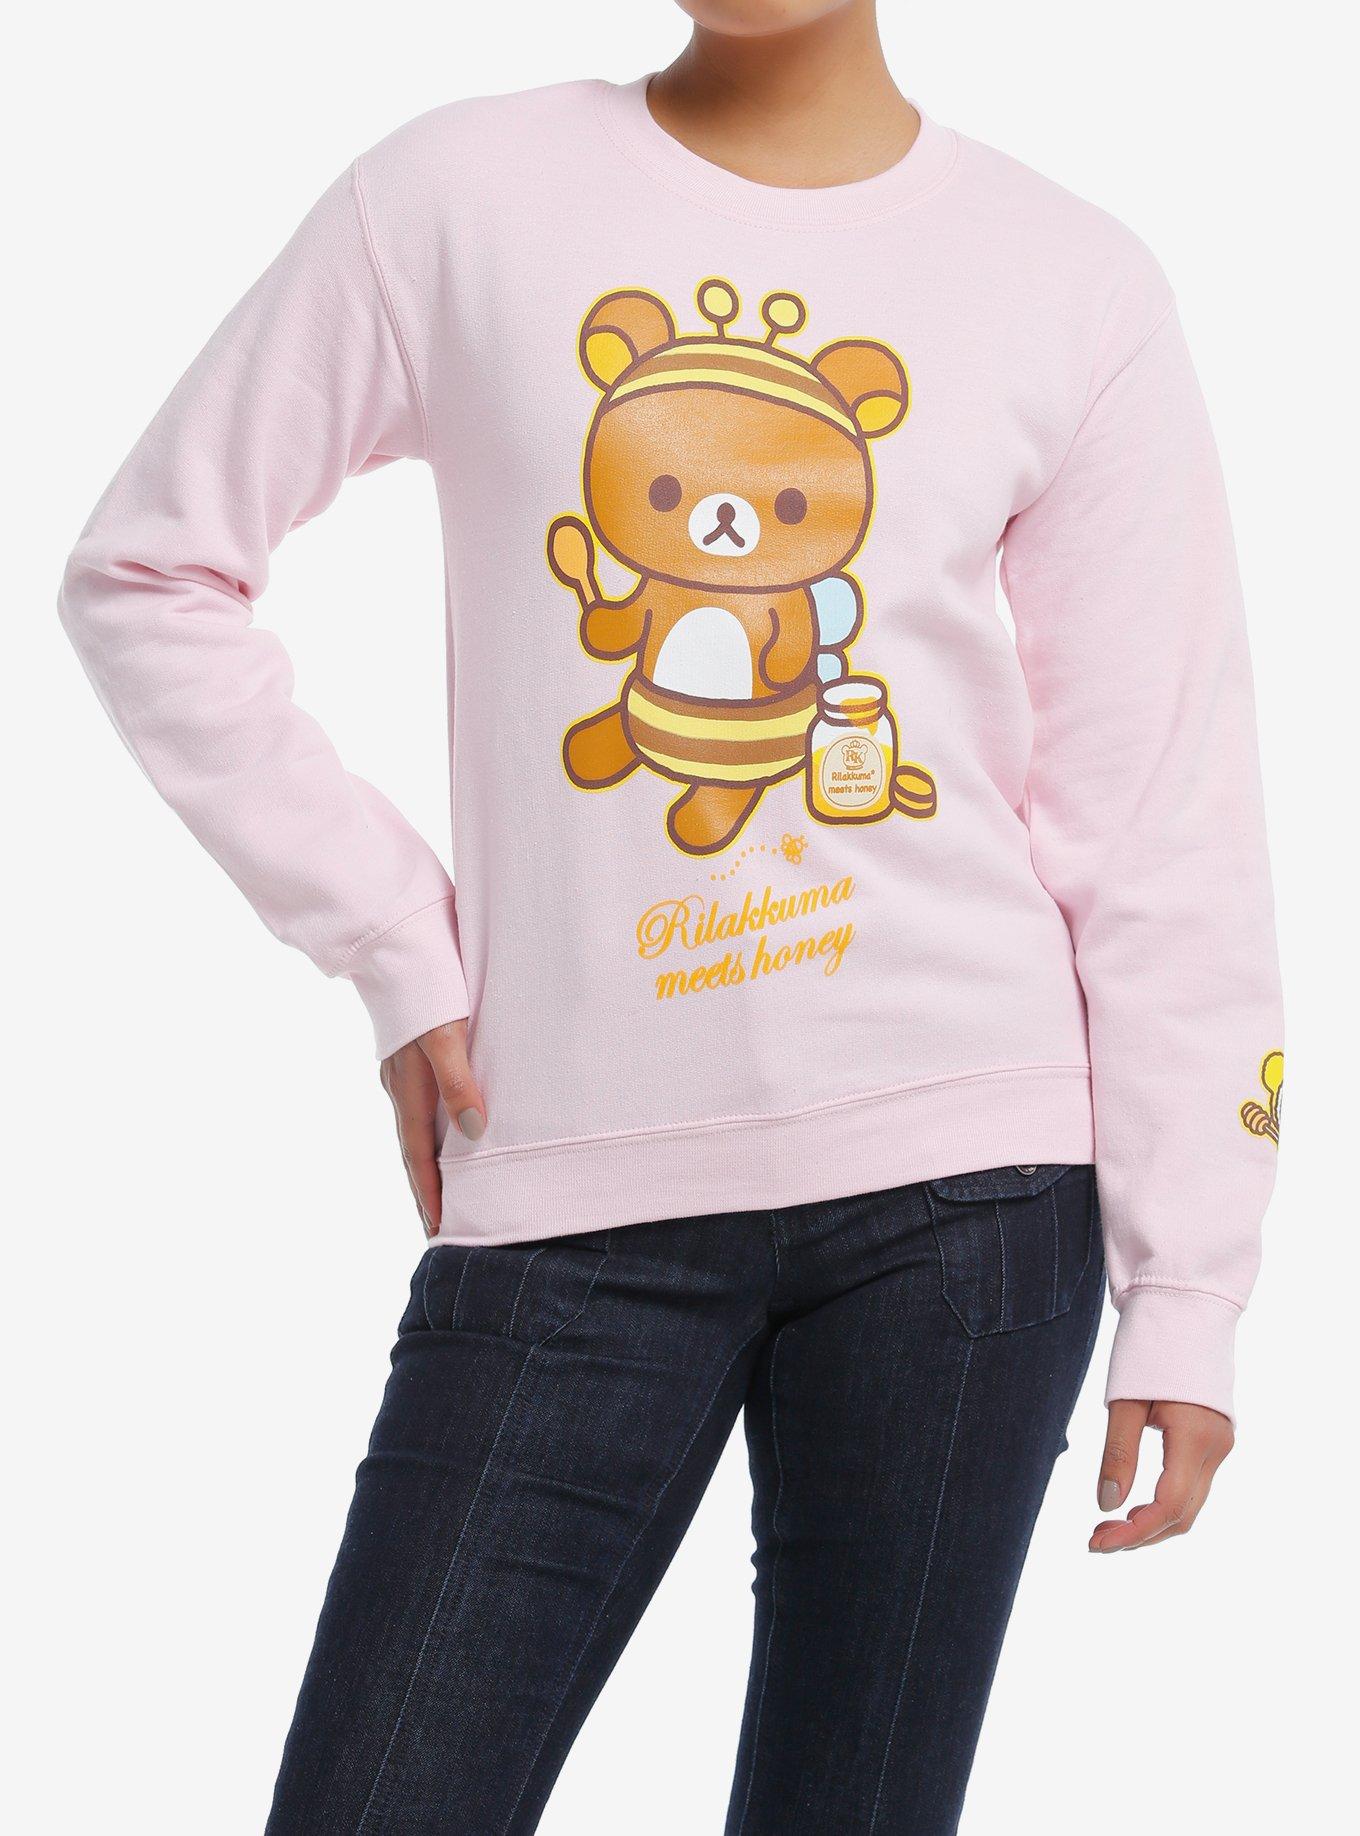 Rilakkuma Meets Honey Pastel Pink Girls Sweatshirt